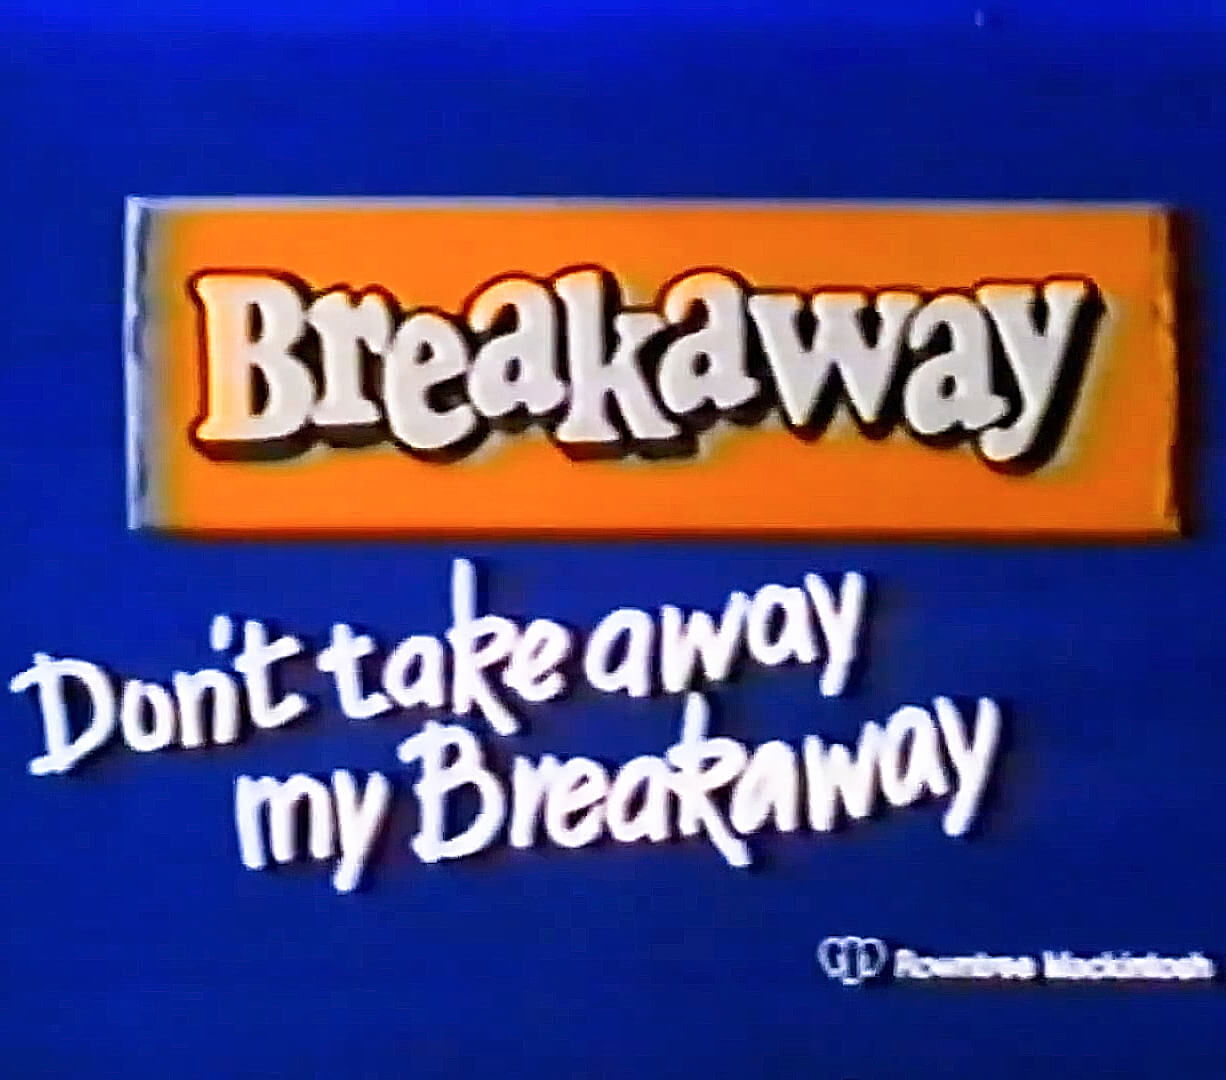 Don't Take Away My Breakaway!